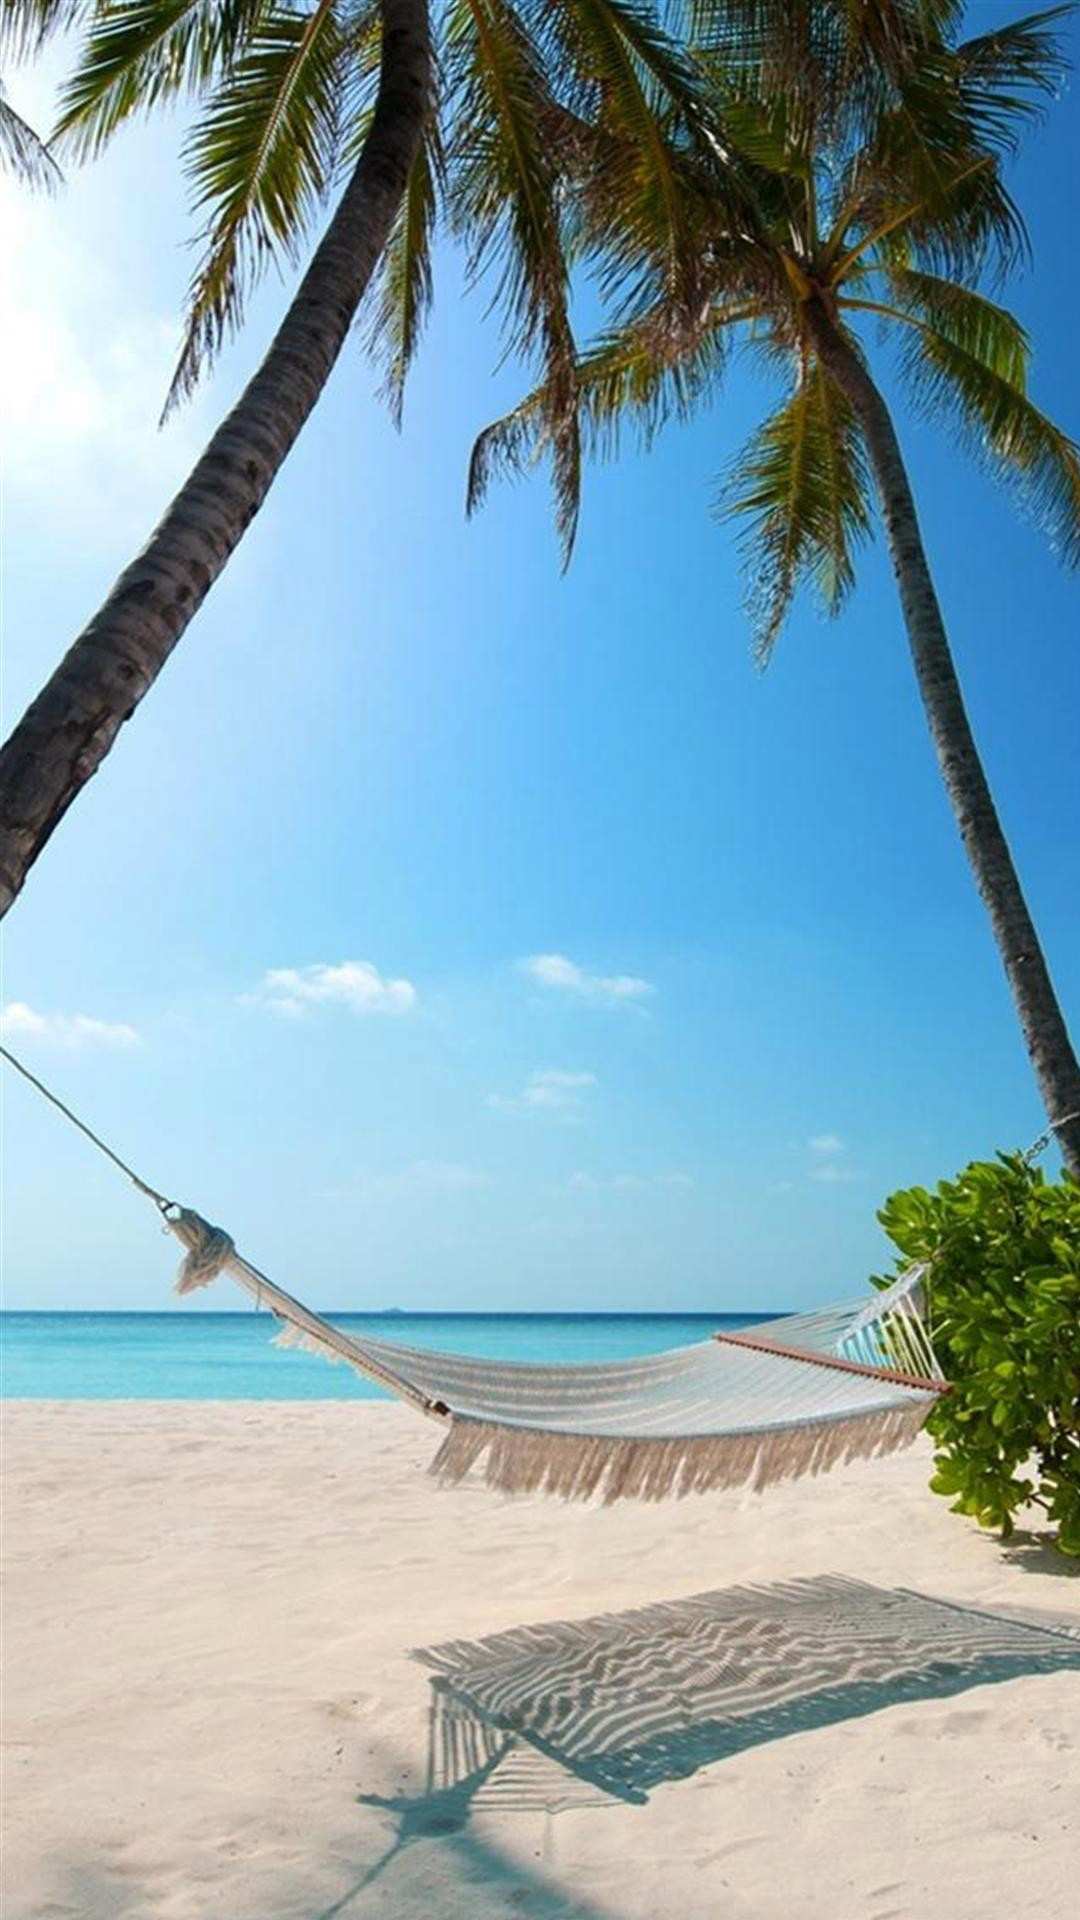 beach wallpaper iphone 6,hammock,caribbean,tropics,vacation,palm tree